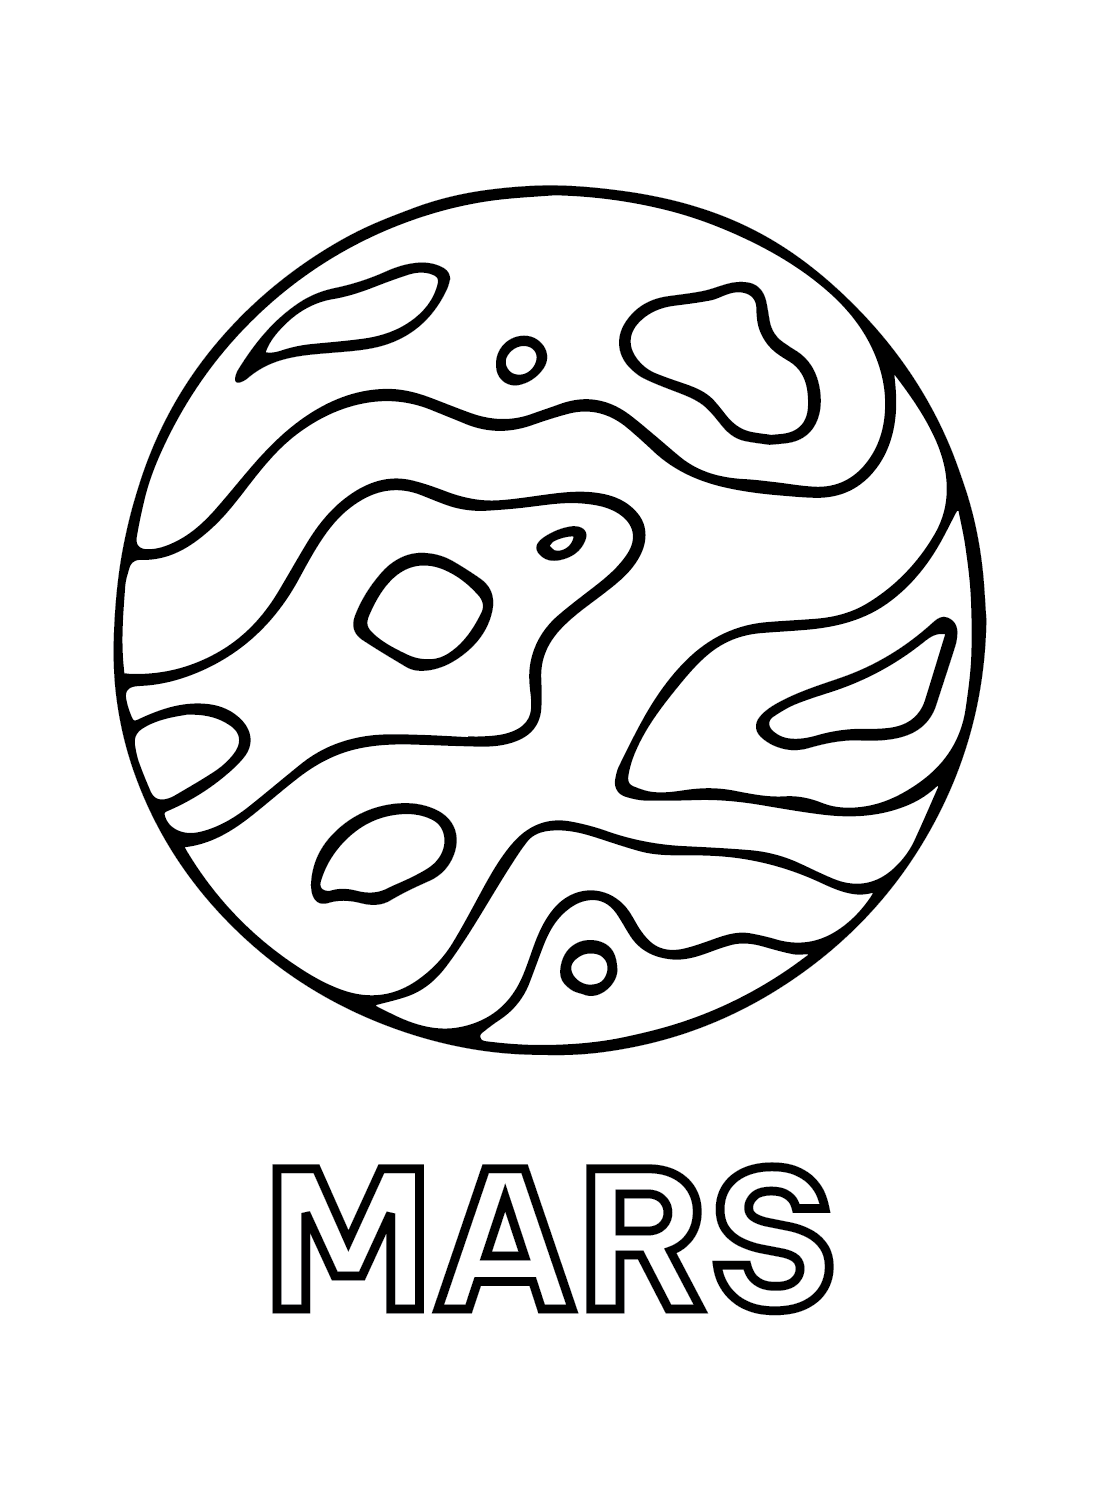 Print Mars from Mars